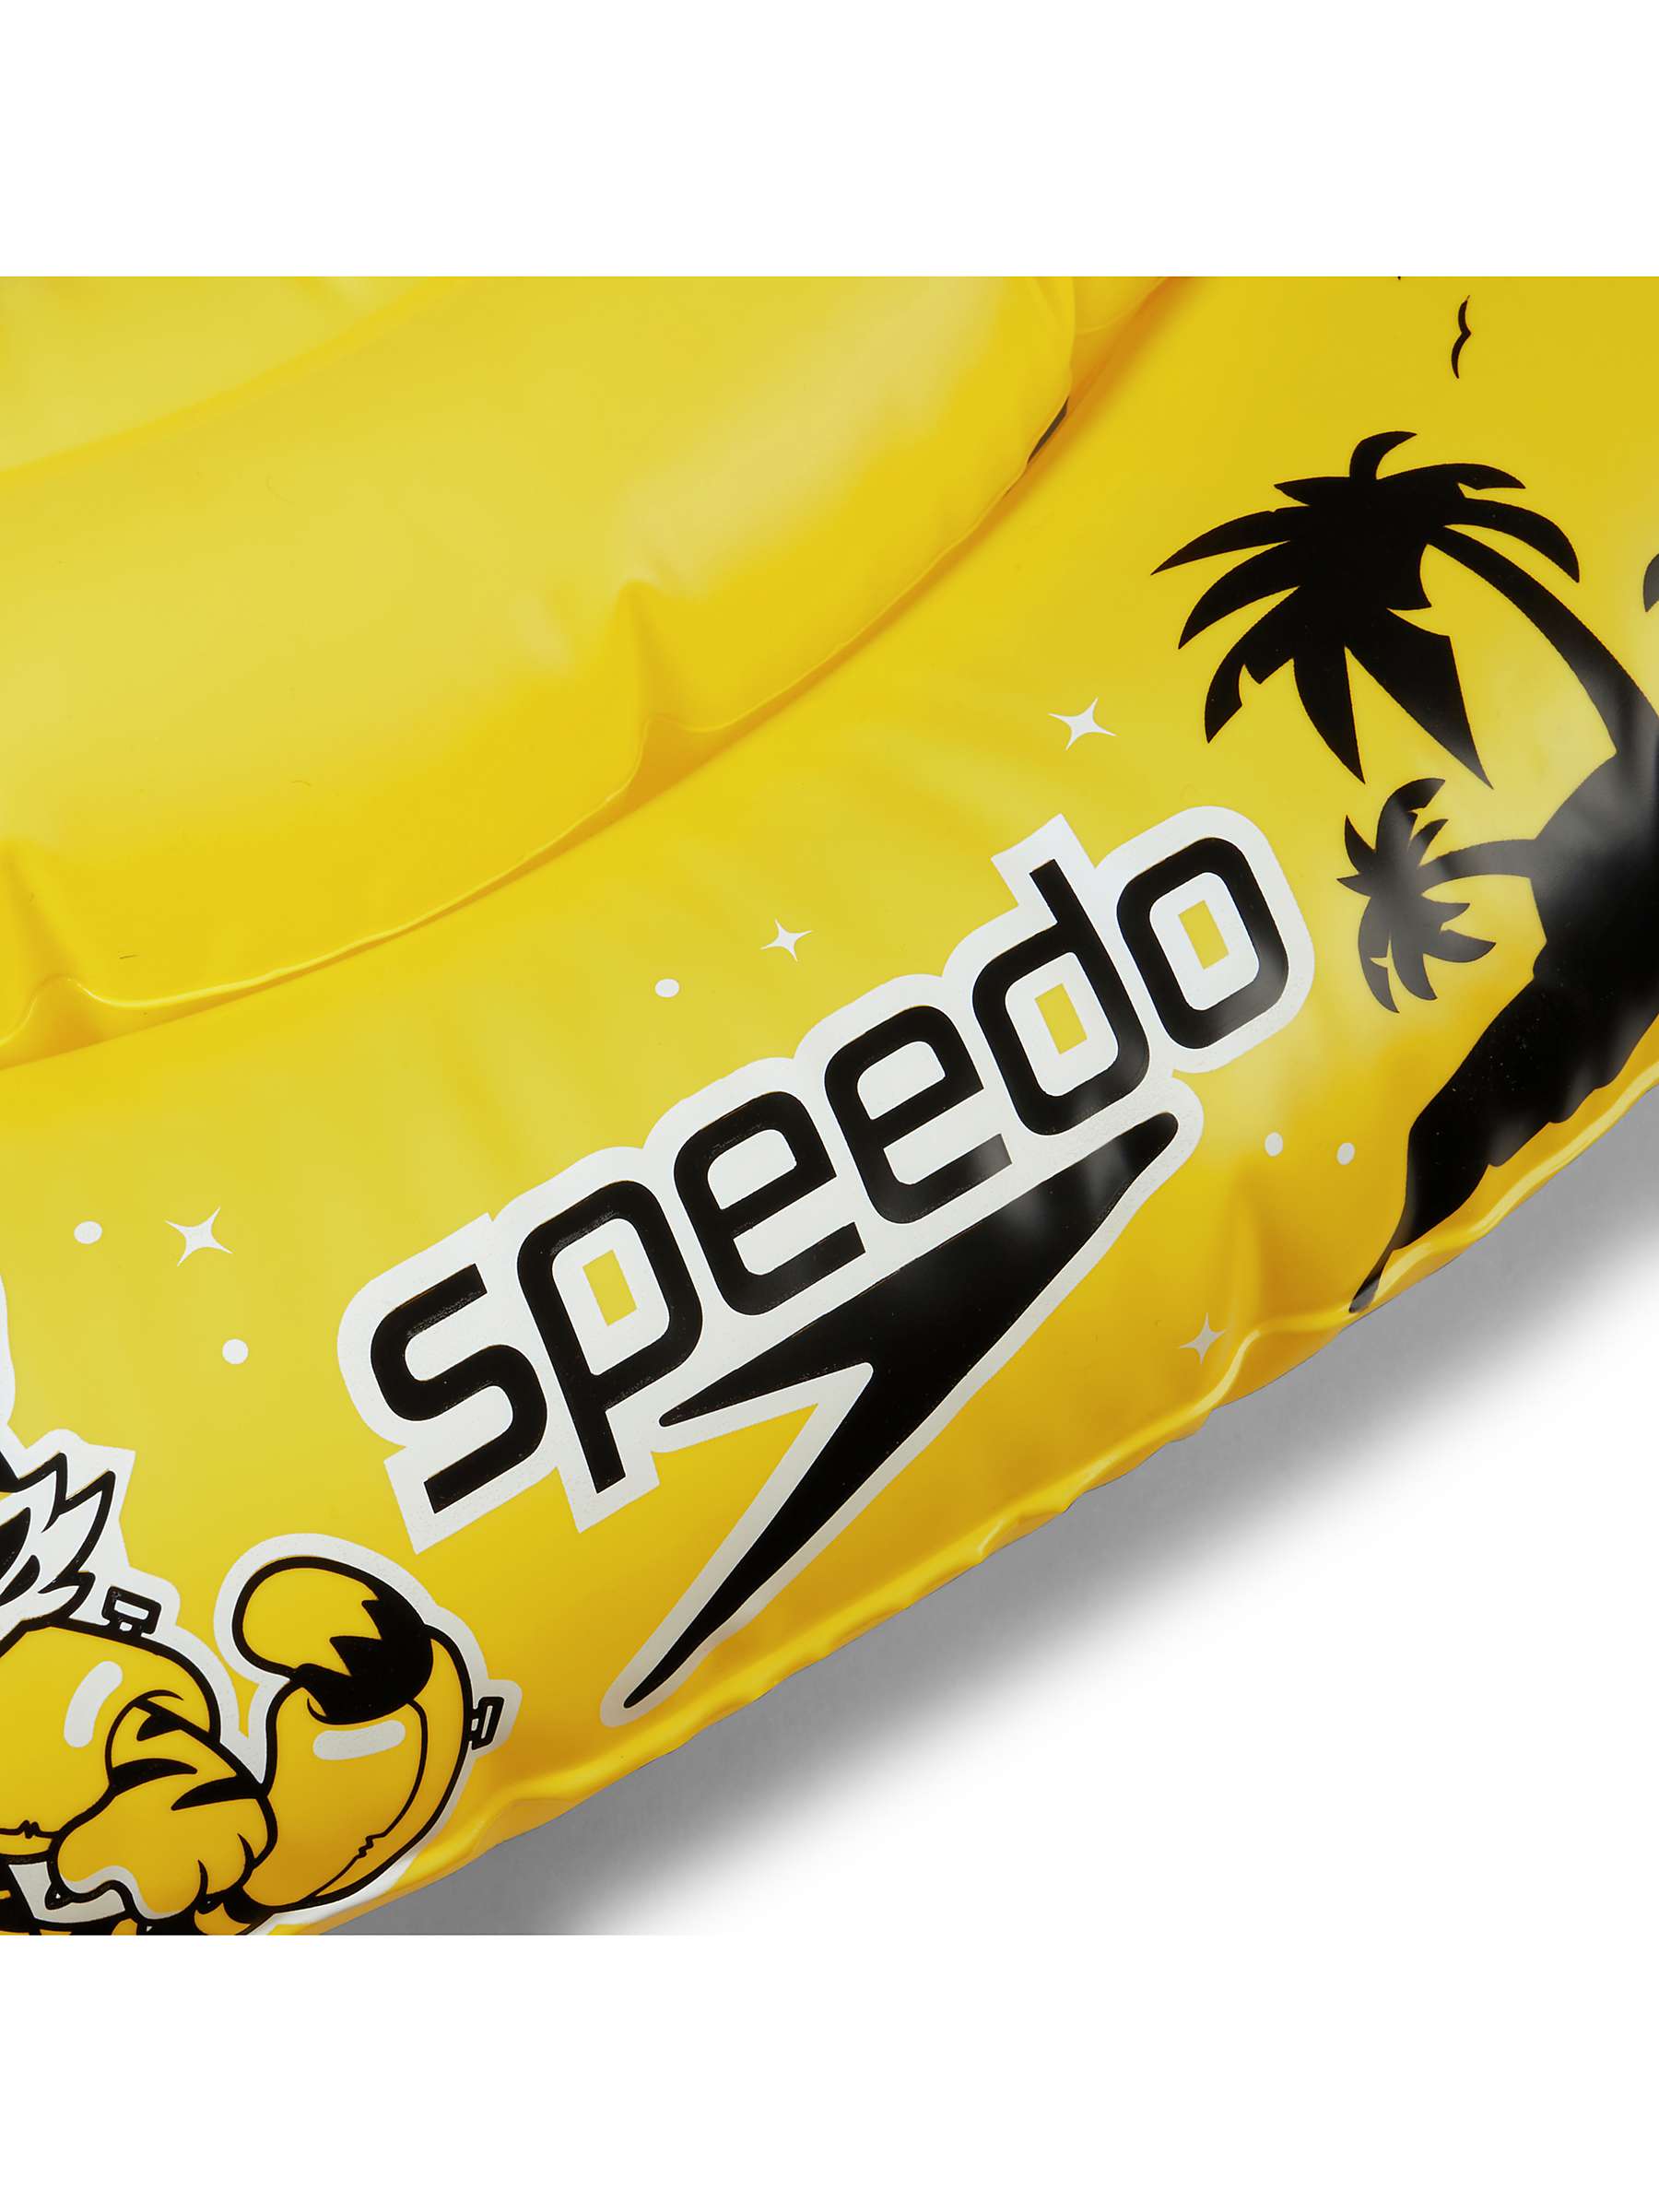 Buy Speedo Baby Learn To Swim Seat, Yellow Online at johnlewis.com